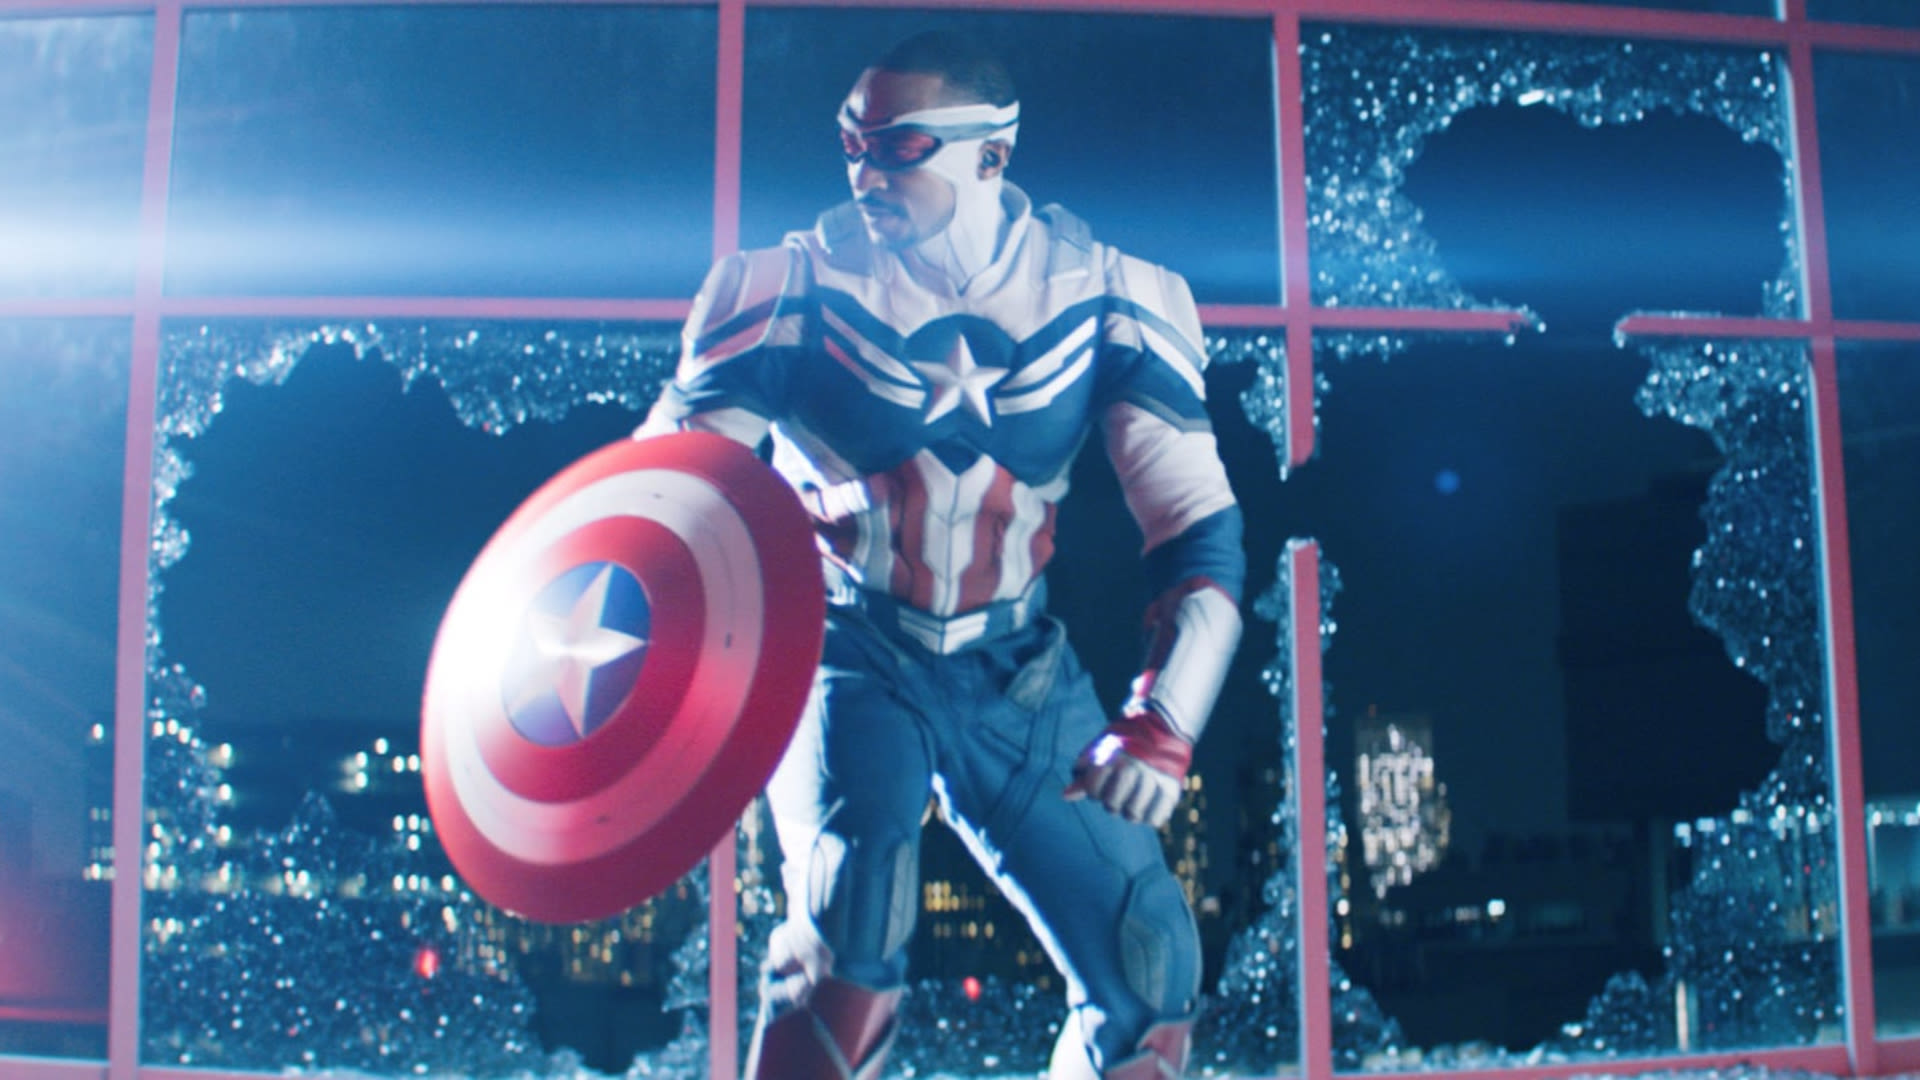 Captain America 4 star says the Marvel film will be a "reality-based superhero movie"